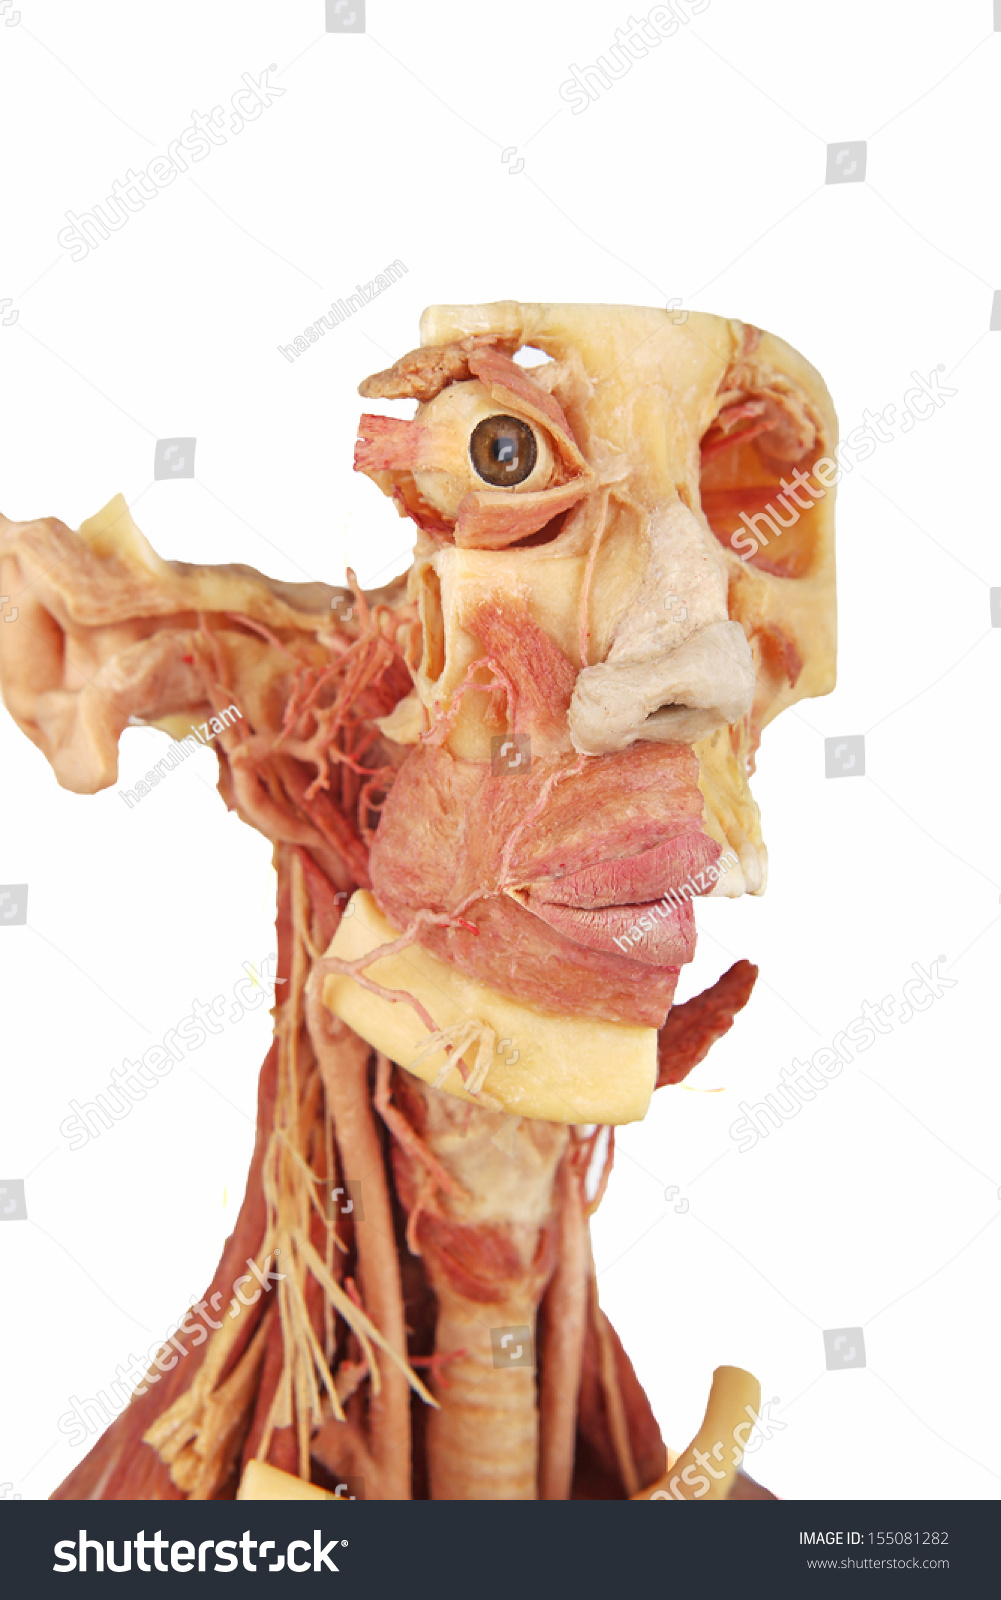 Real Human Face Anatomy Stock Photo 155081282 : Shutterstock